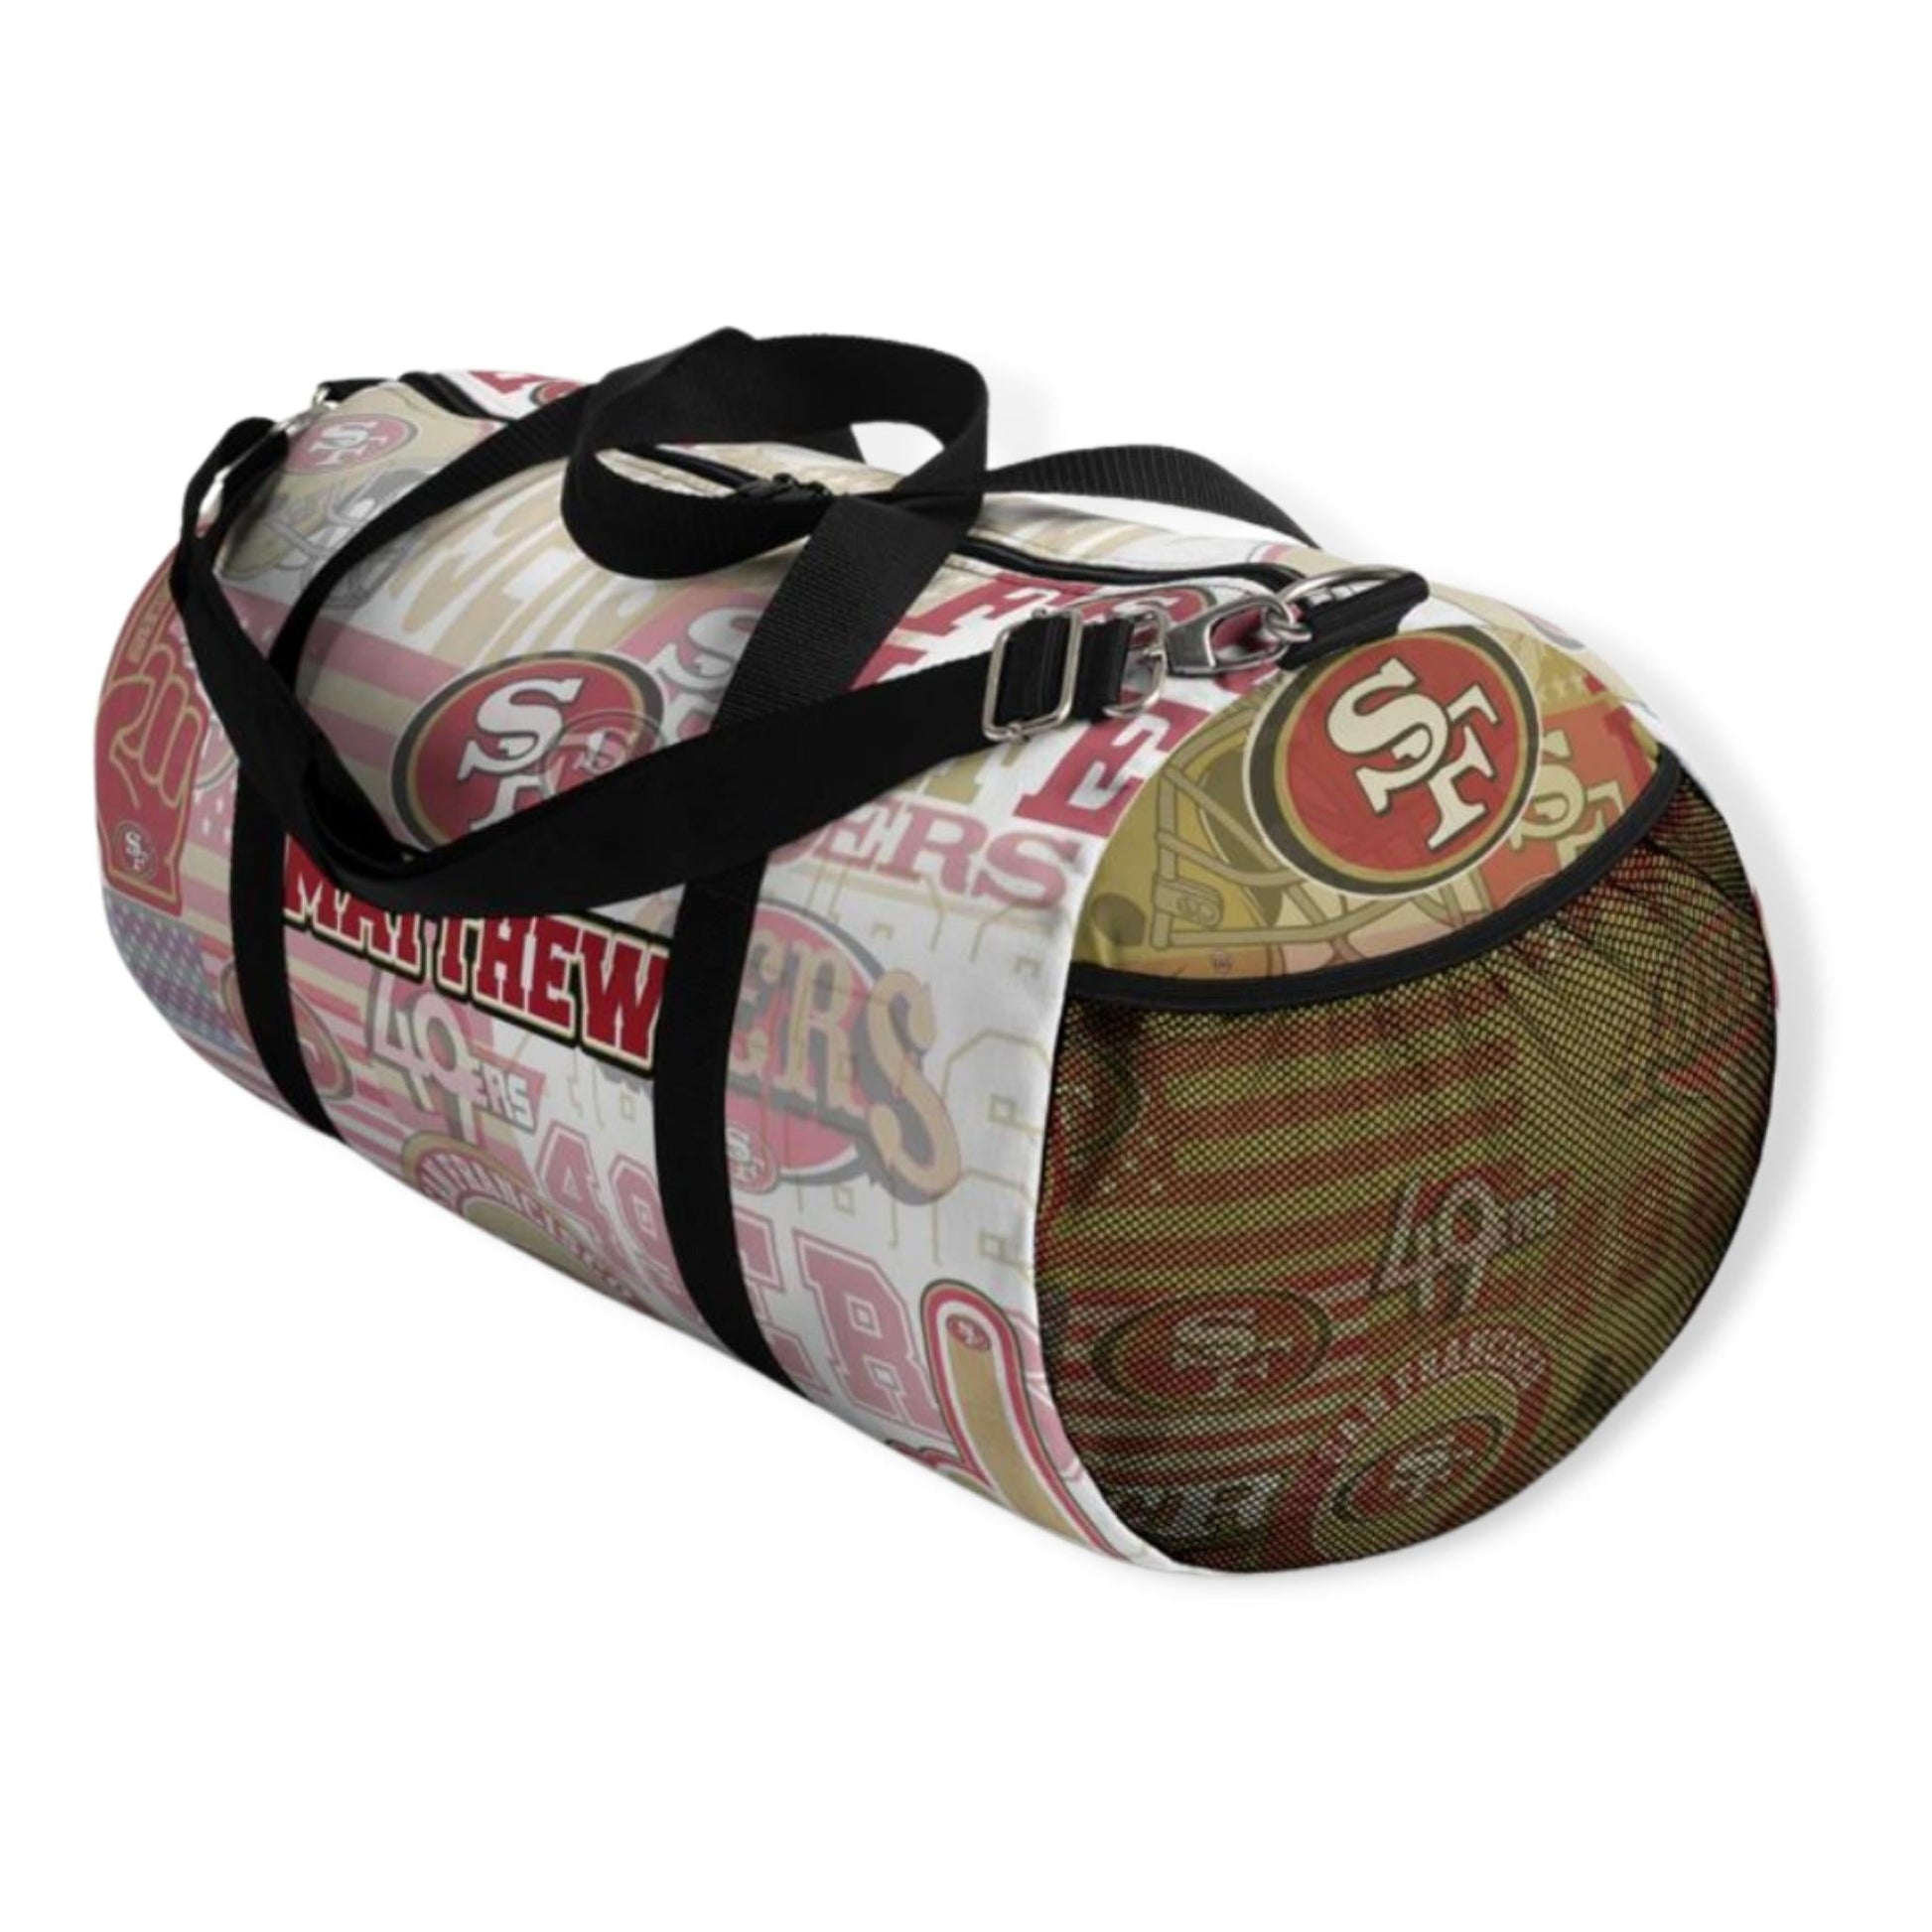 All Over Print Duffle Bag - a Spirit Animal - Bags $120-$150 $60-$75 $60-$90